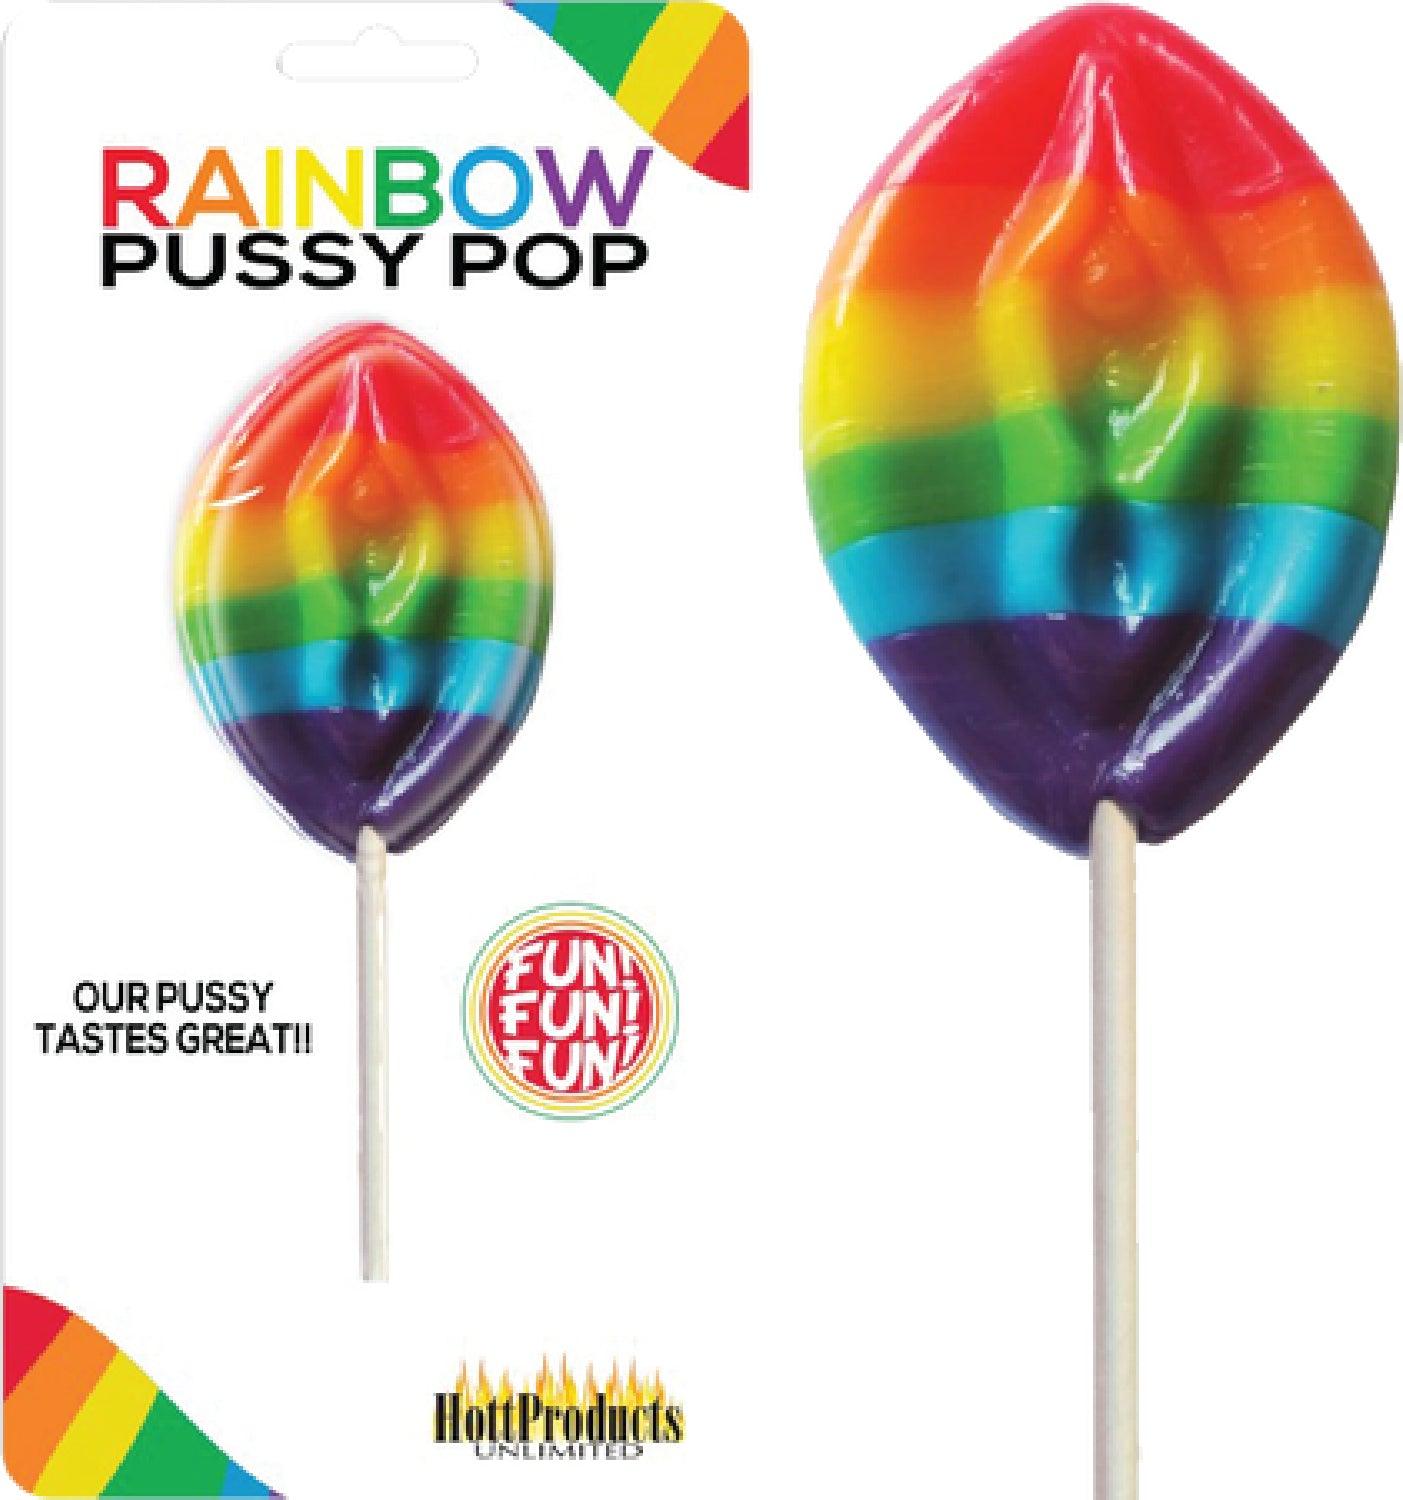 Rainbow Pussy Pop - Take A Peek